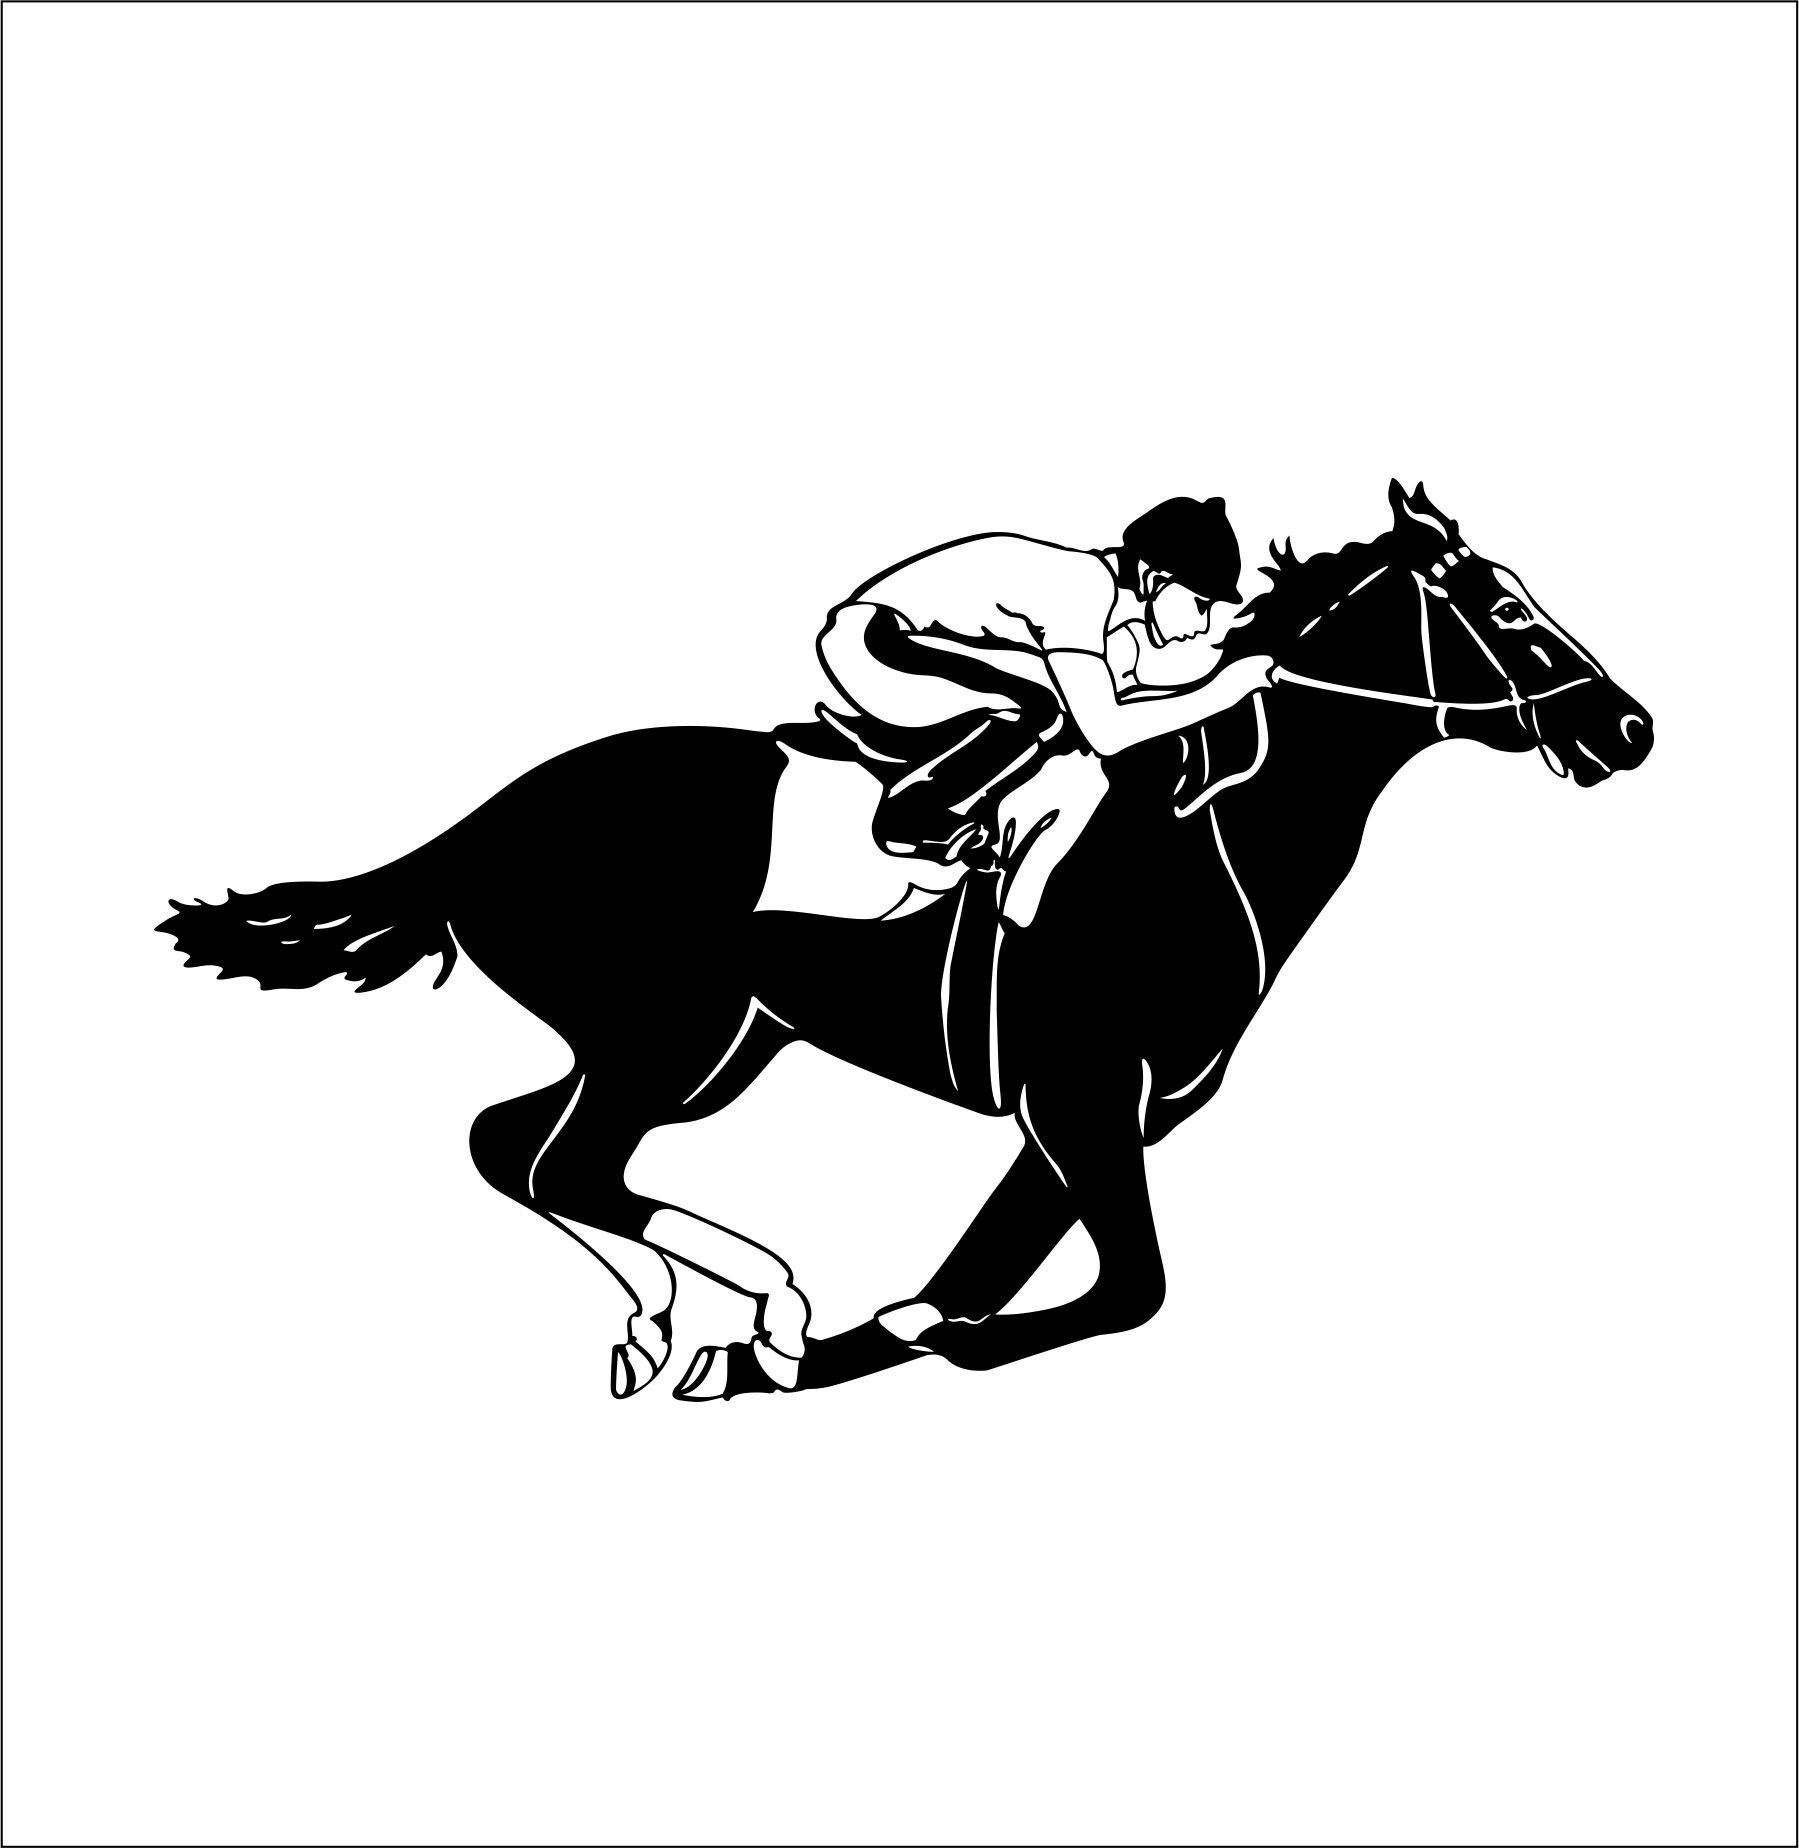 Знак конюшни. Символ конного спорта. Силуэт наездника на лошади. Символ лошади. Скачки Векторная.